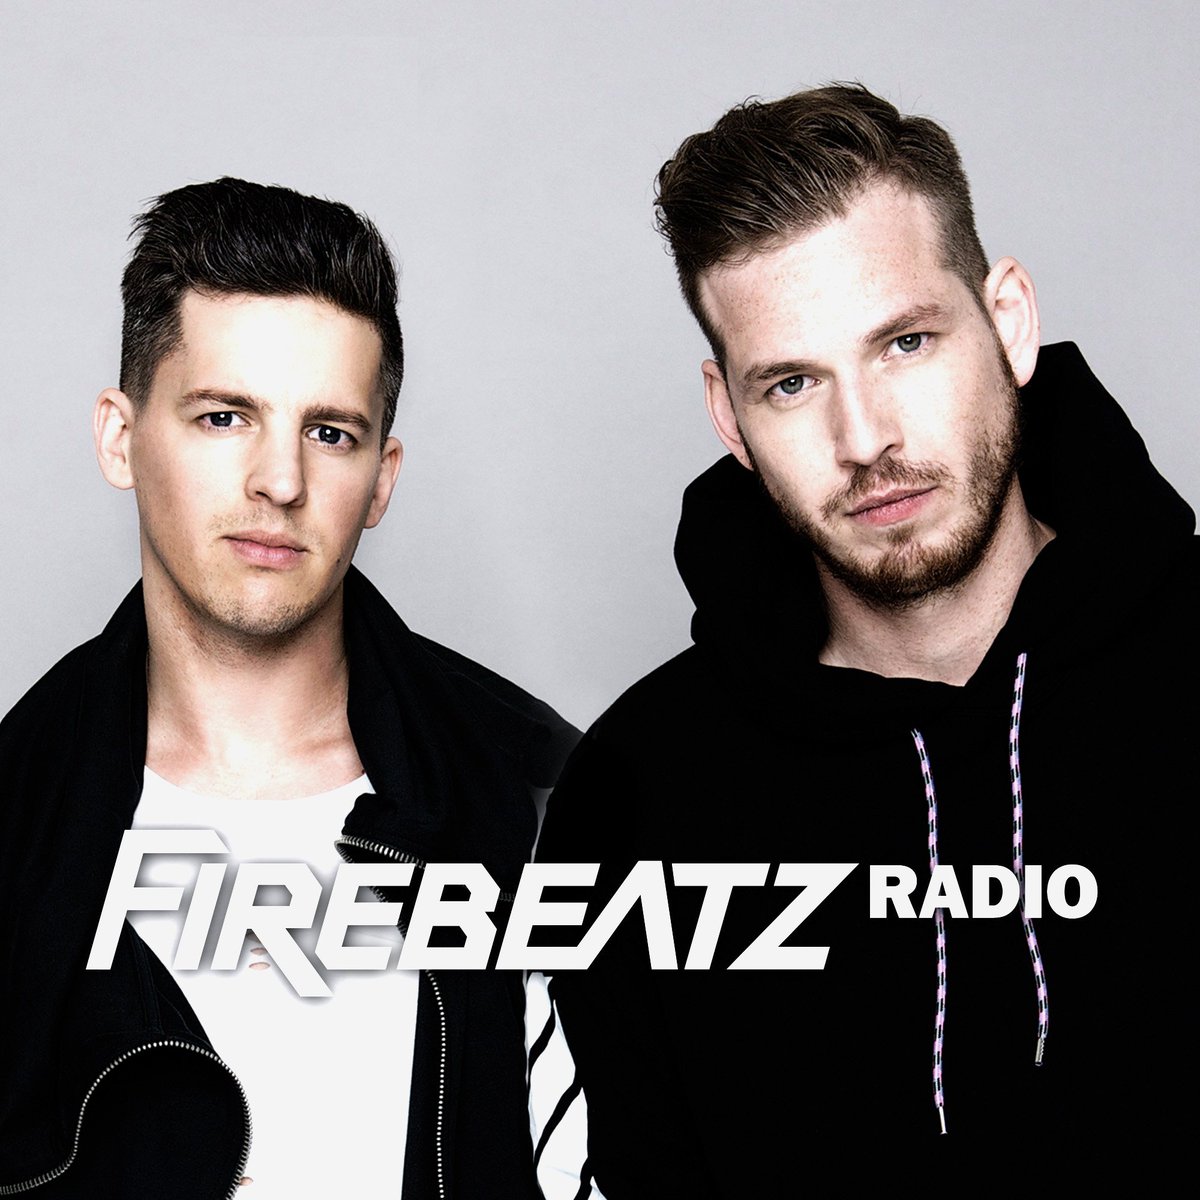 New episode of Firebeatz Radio! Enjoy your weekend! 🔥📻 bit.ly/FirebeatzRadio… https://t.co/XhwownOoC5